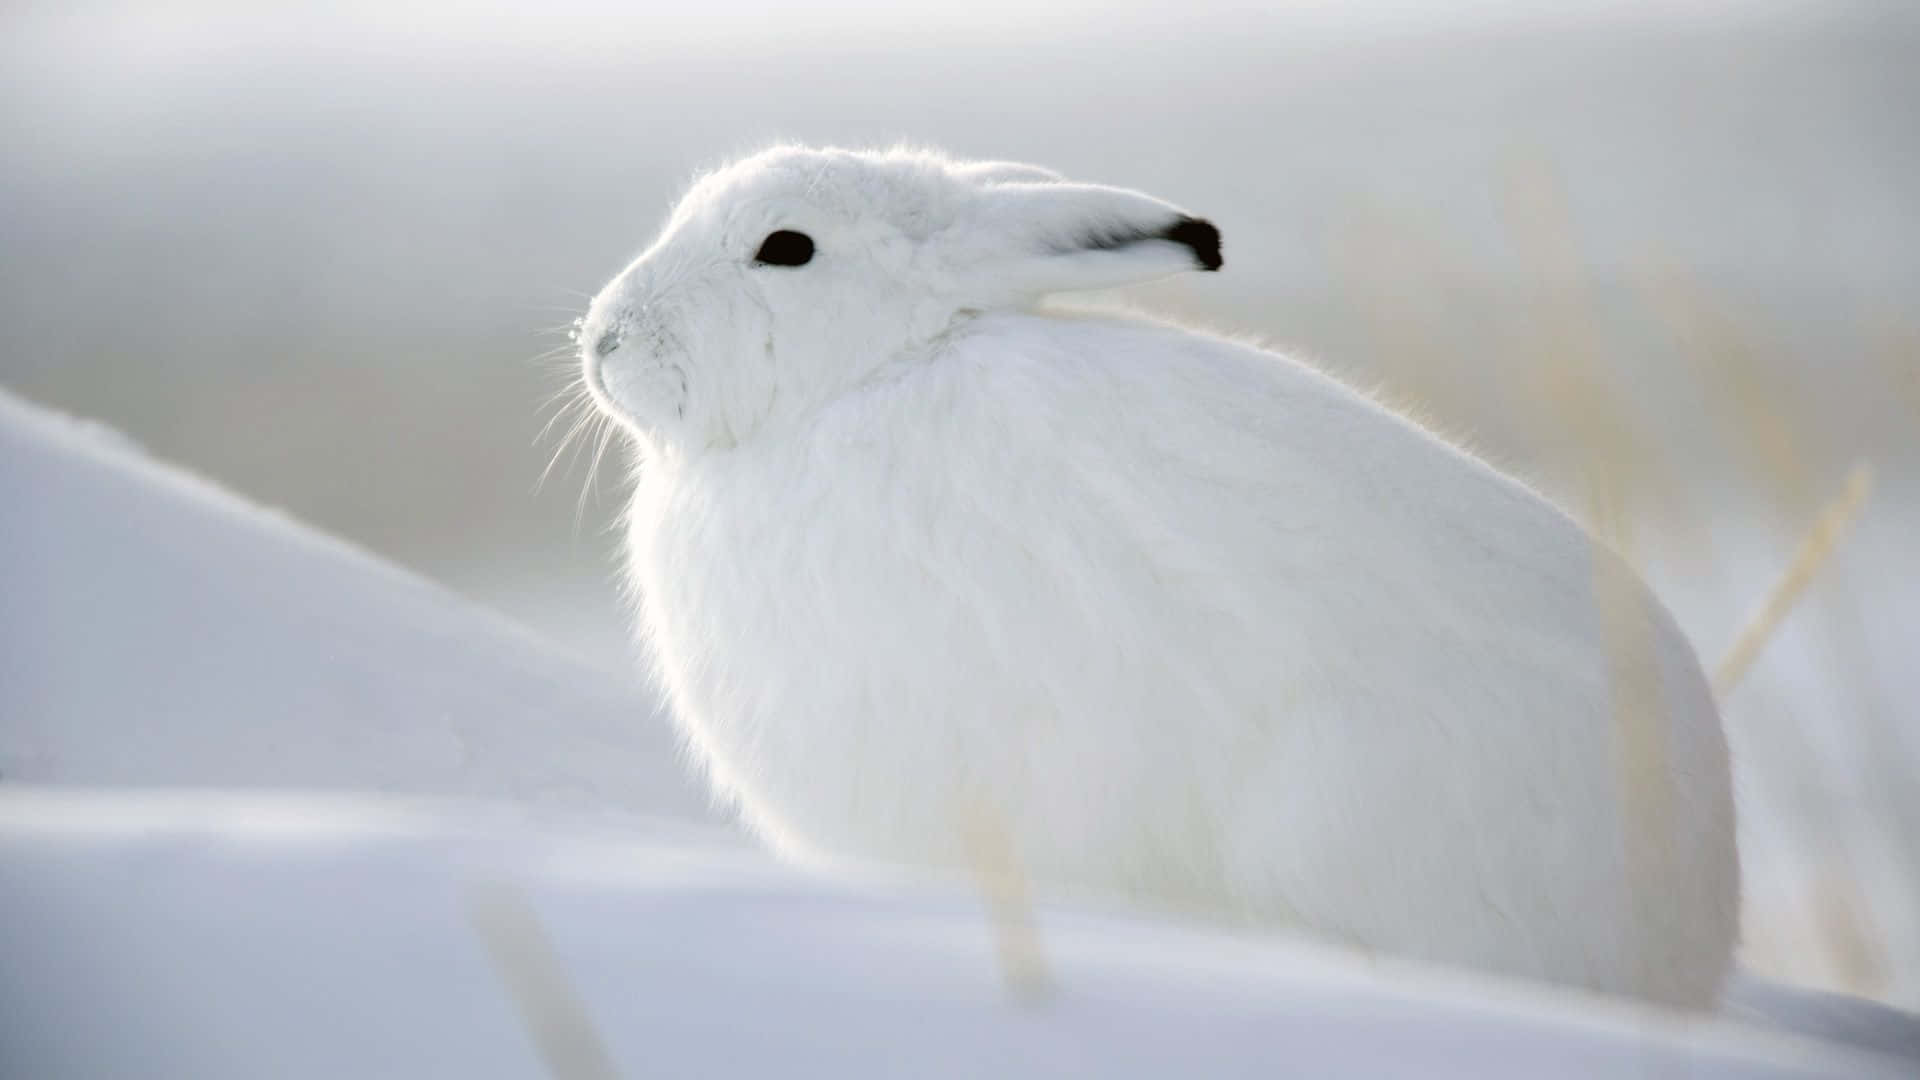 An adorable fluffy bunny enjoying a summer day